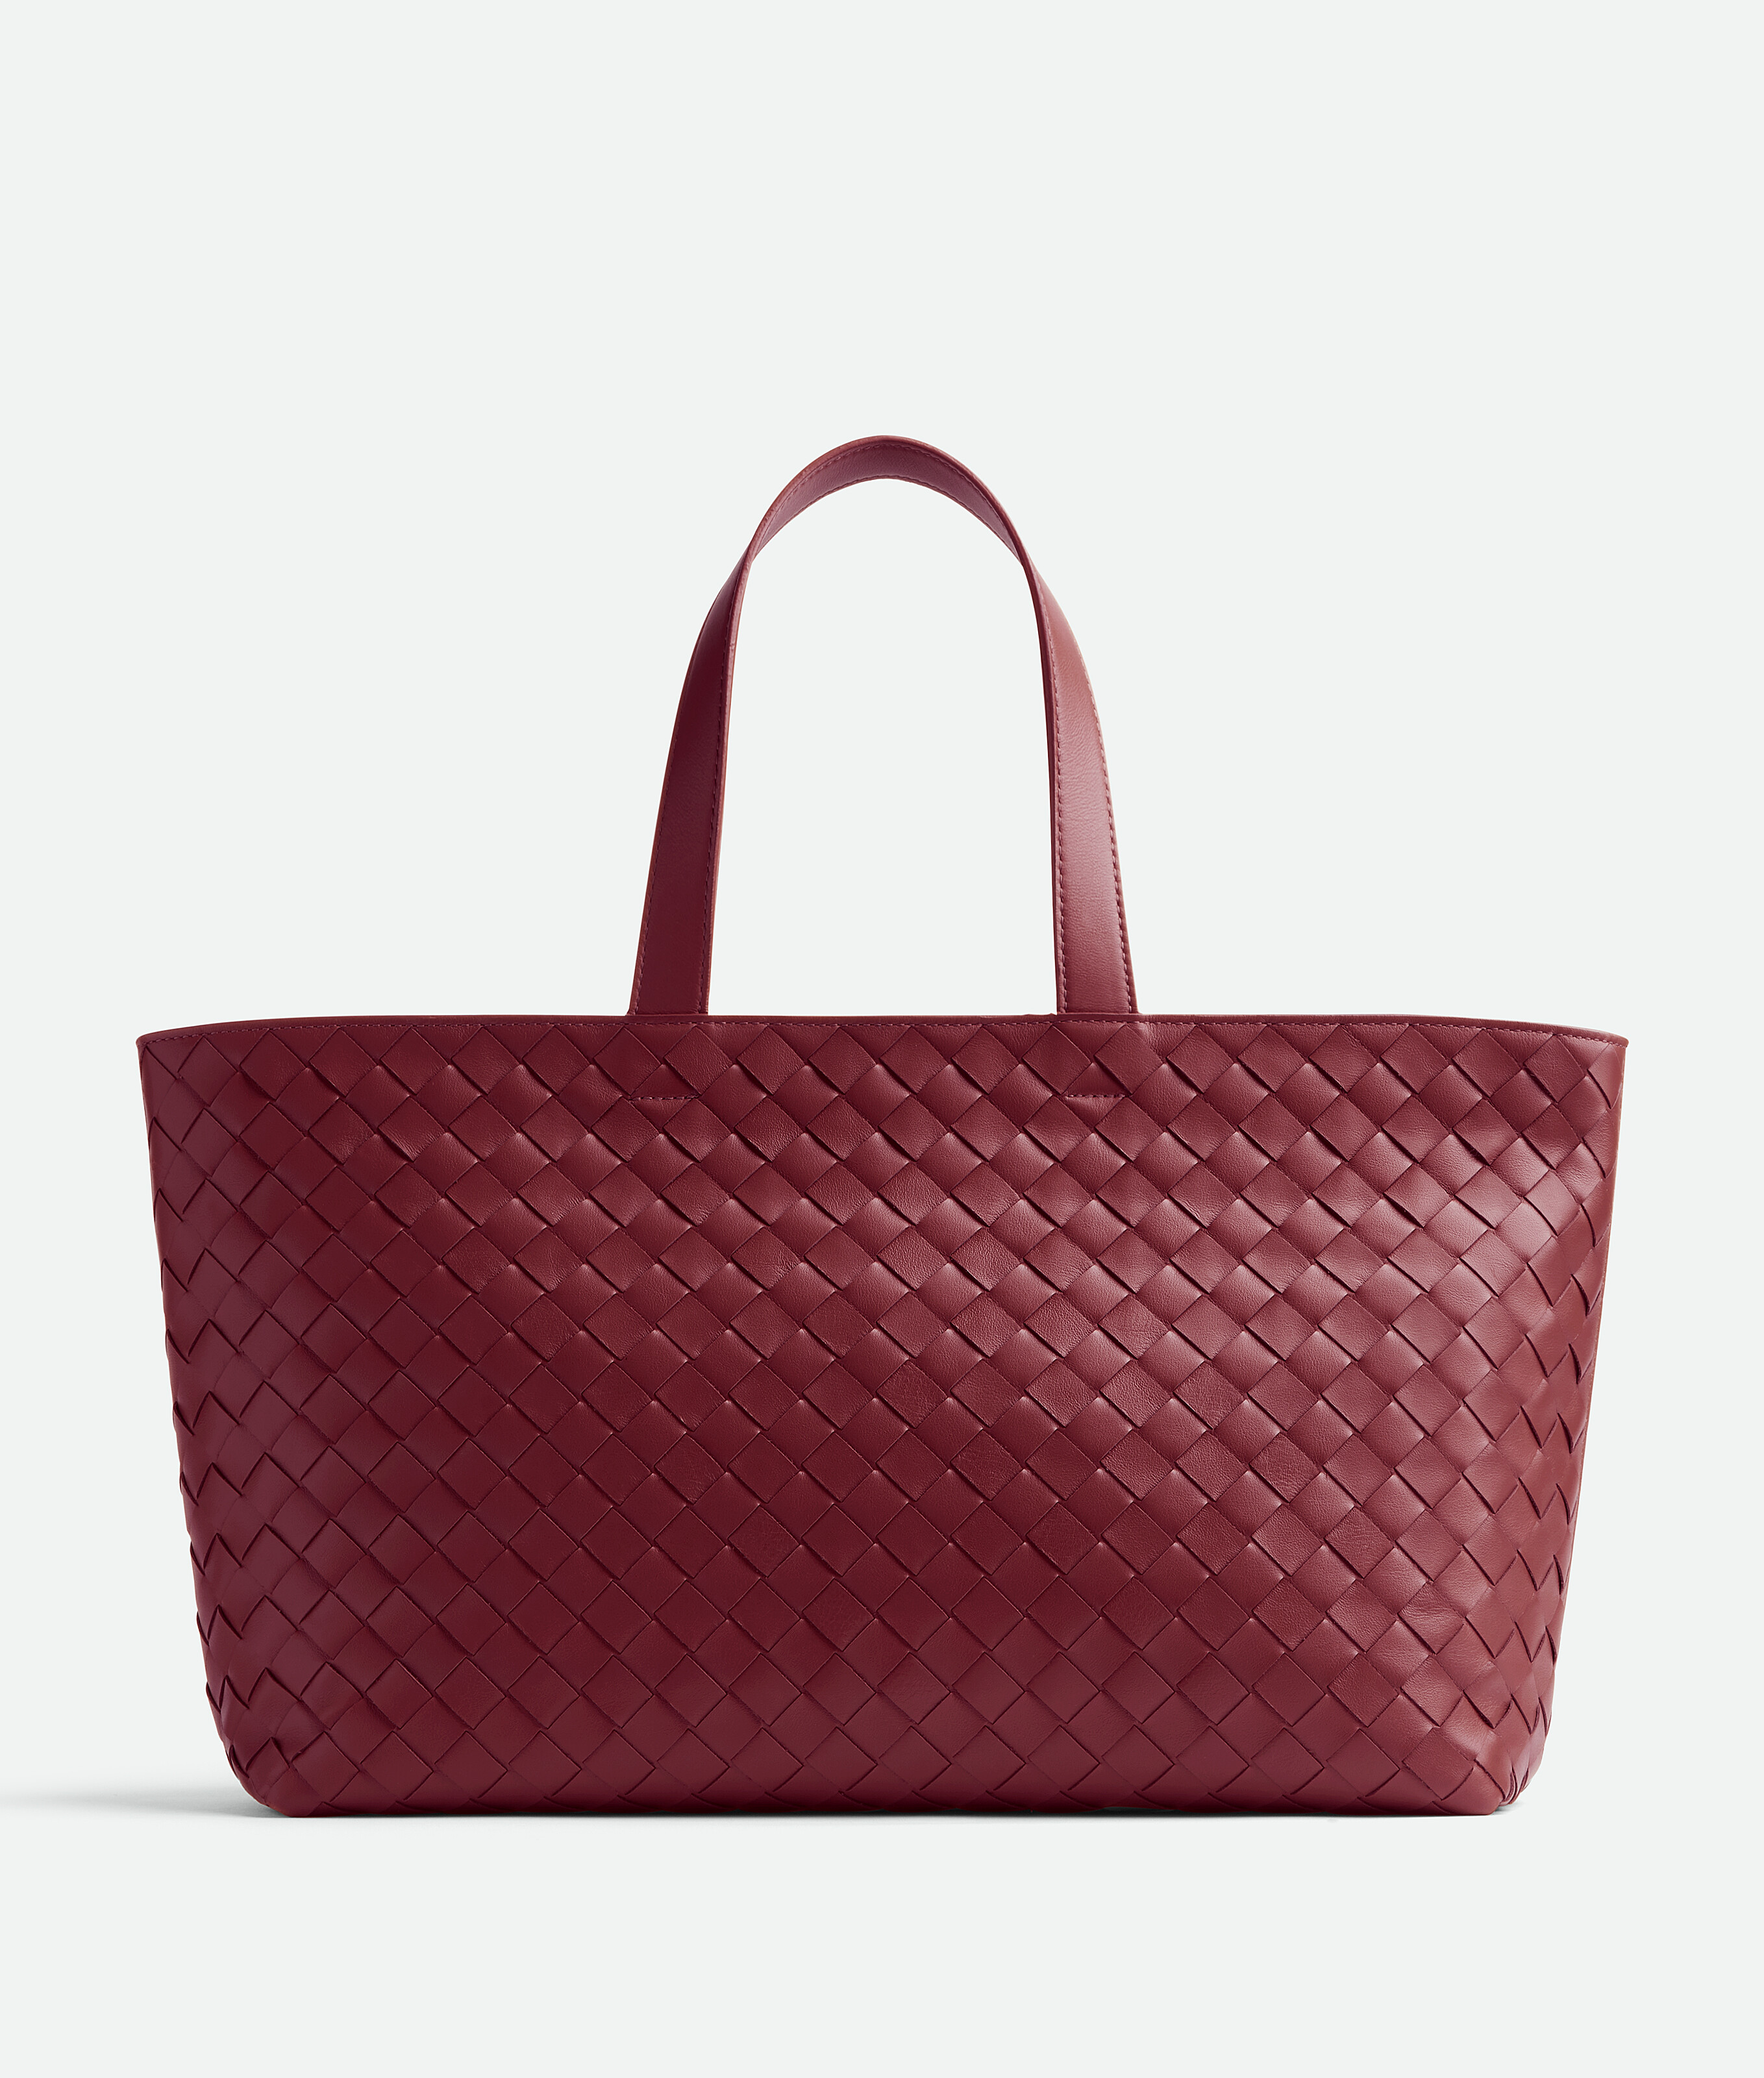 Bottega Veneta Intrecciato Tote Bag - Red - Woman - Calfskin